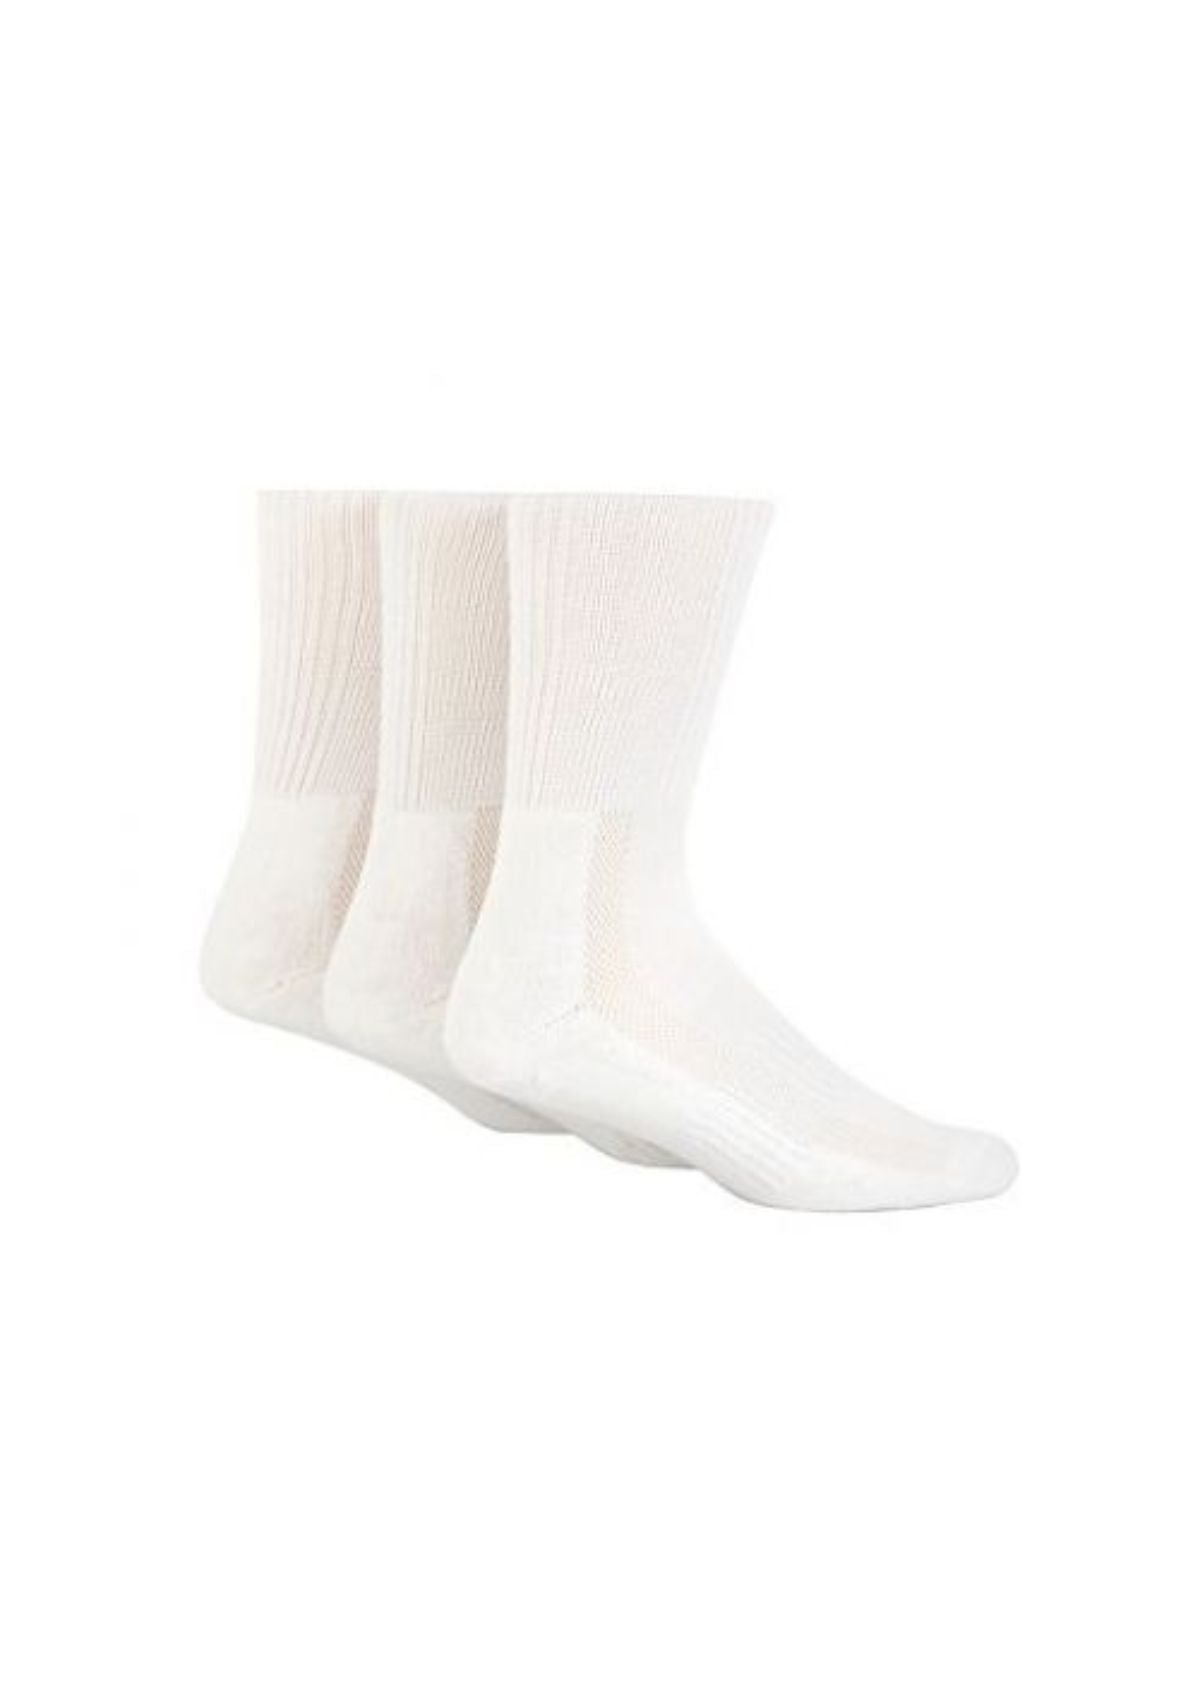 Sports Socks Cotton 3 Pack (White)